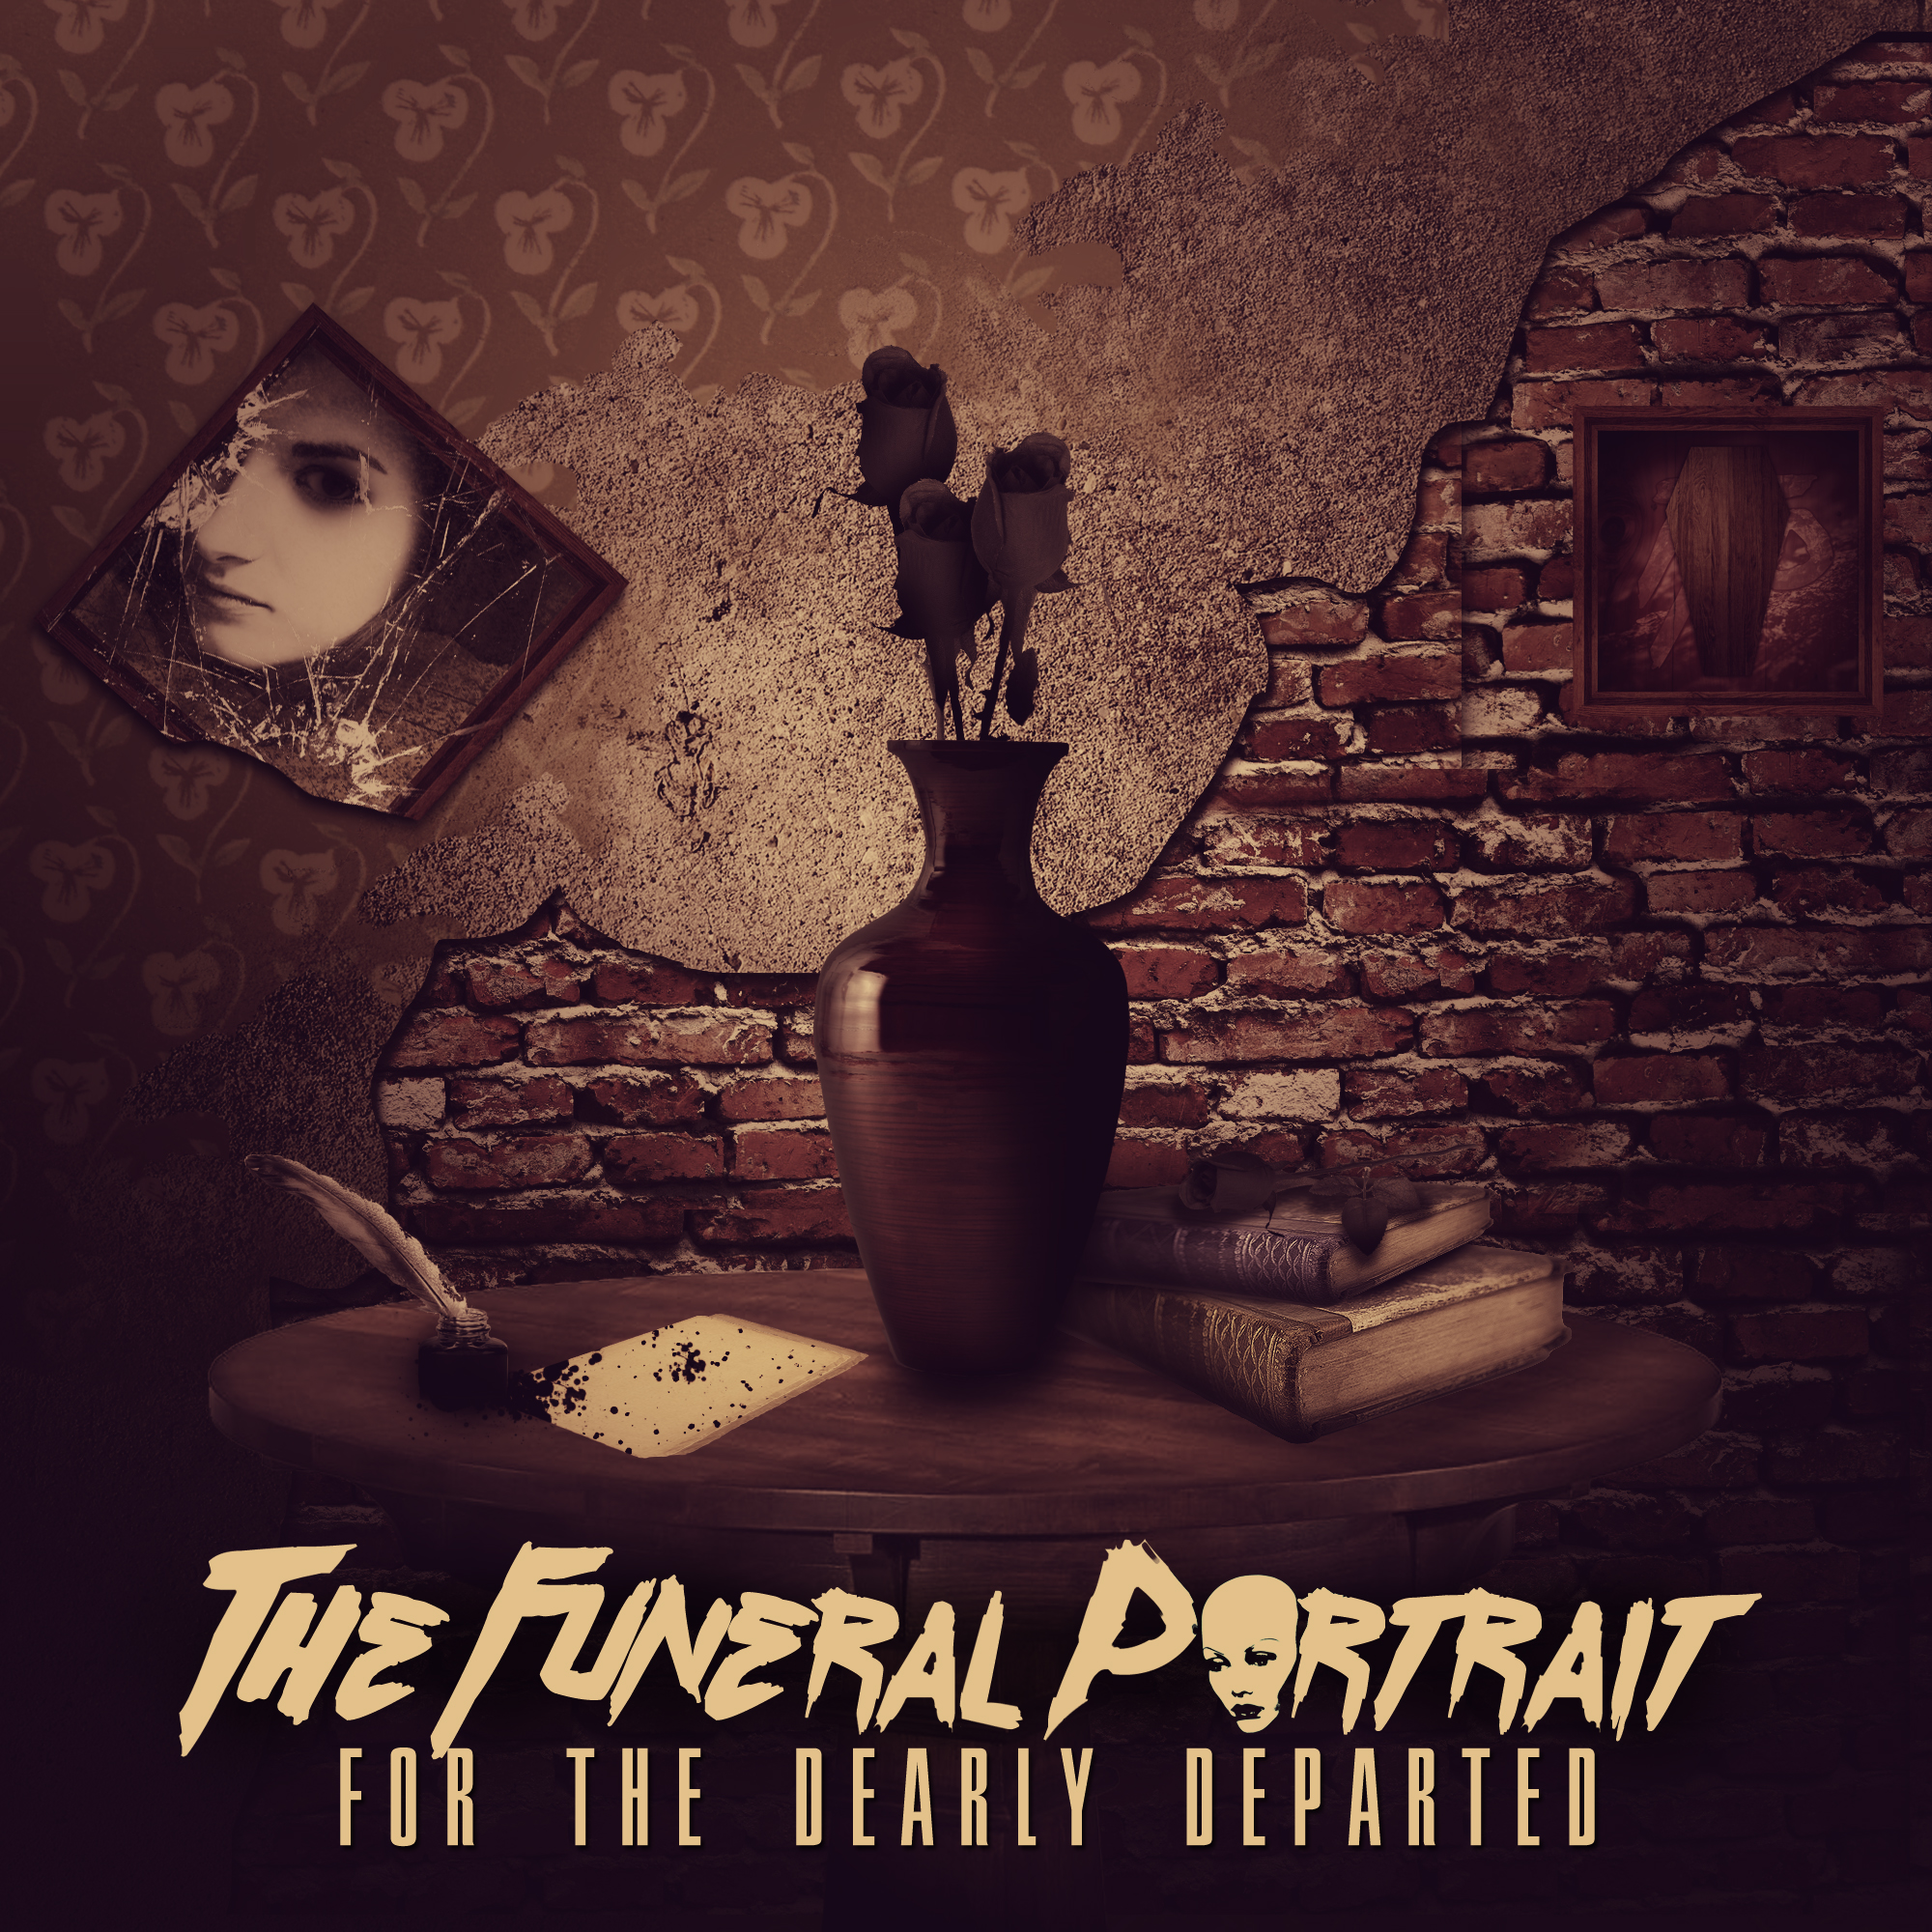 The Funeral Portrait